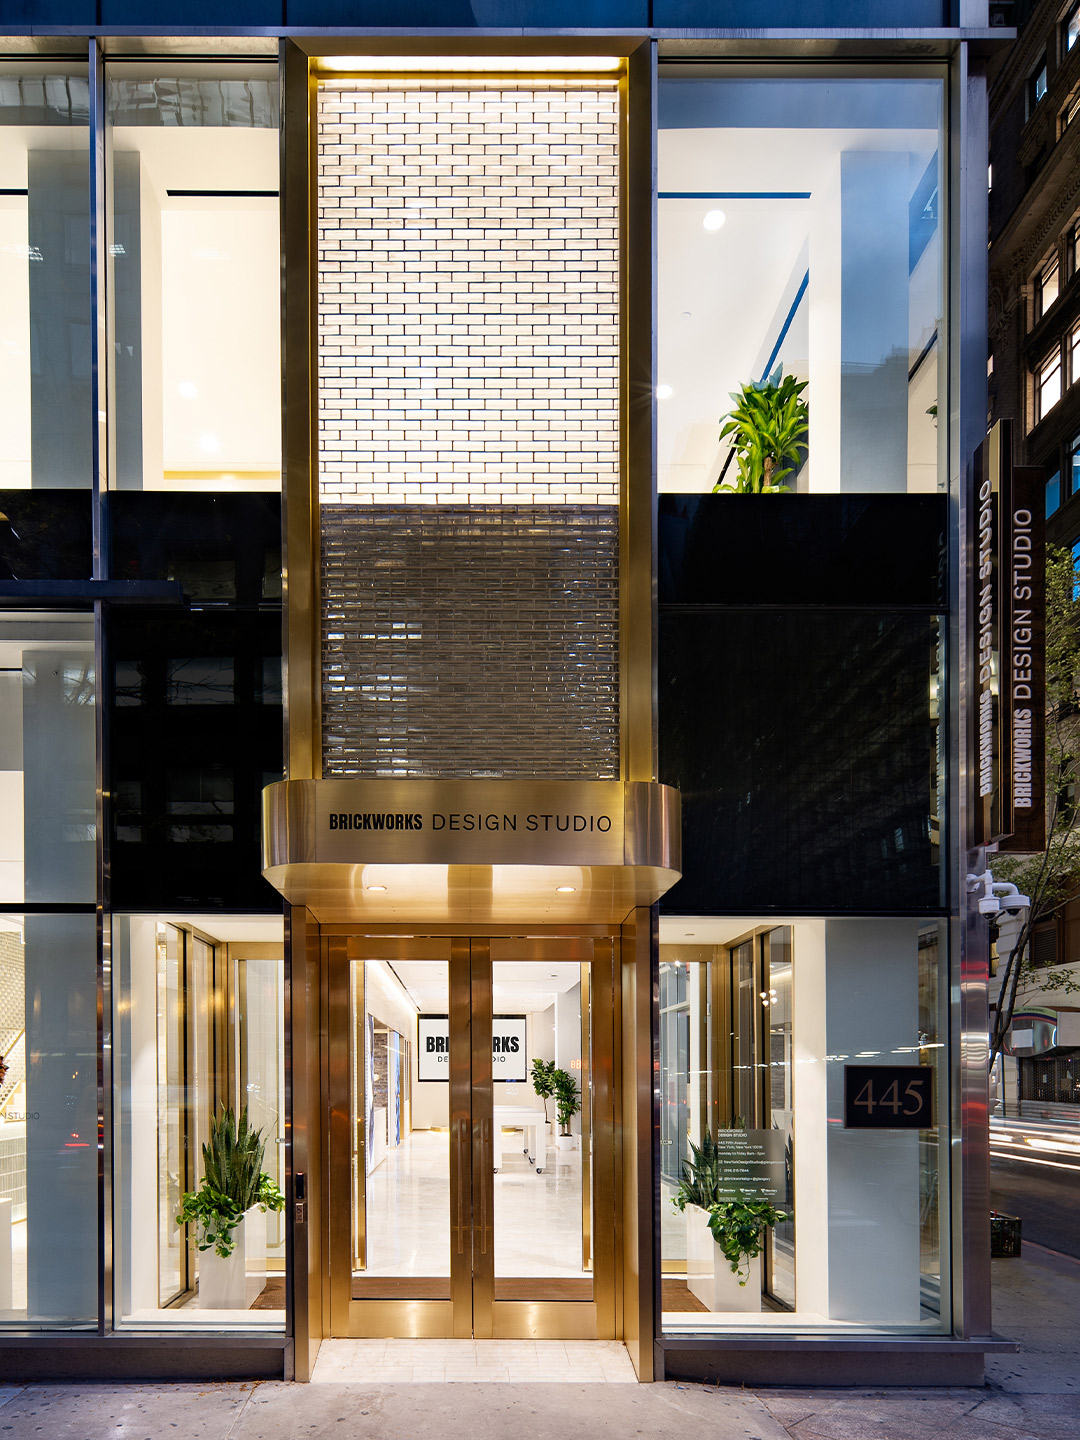 Brickworks opens New York Design Studio on Fifth Avenue